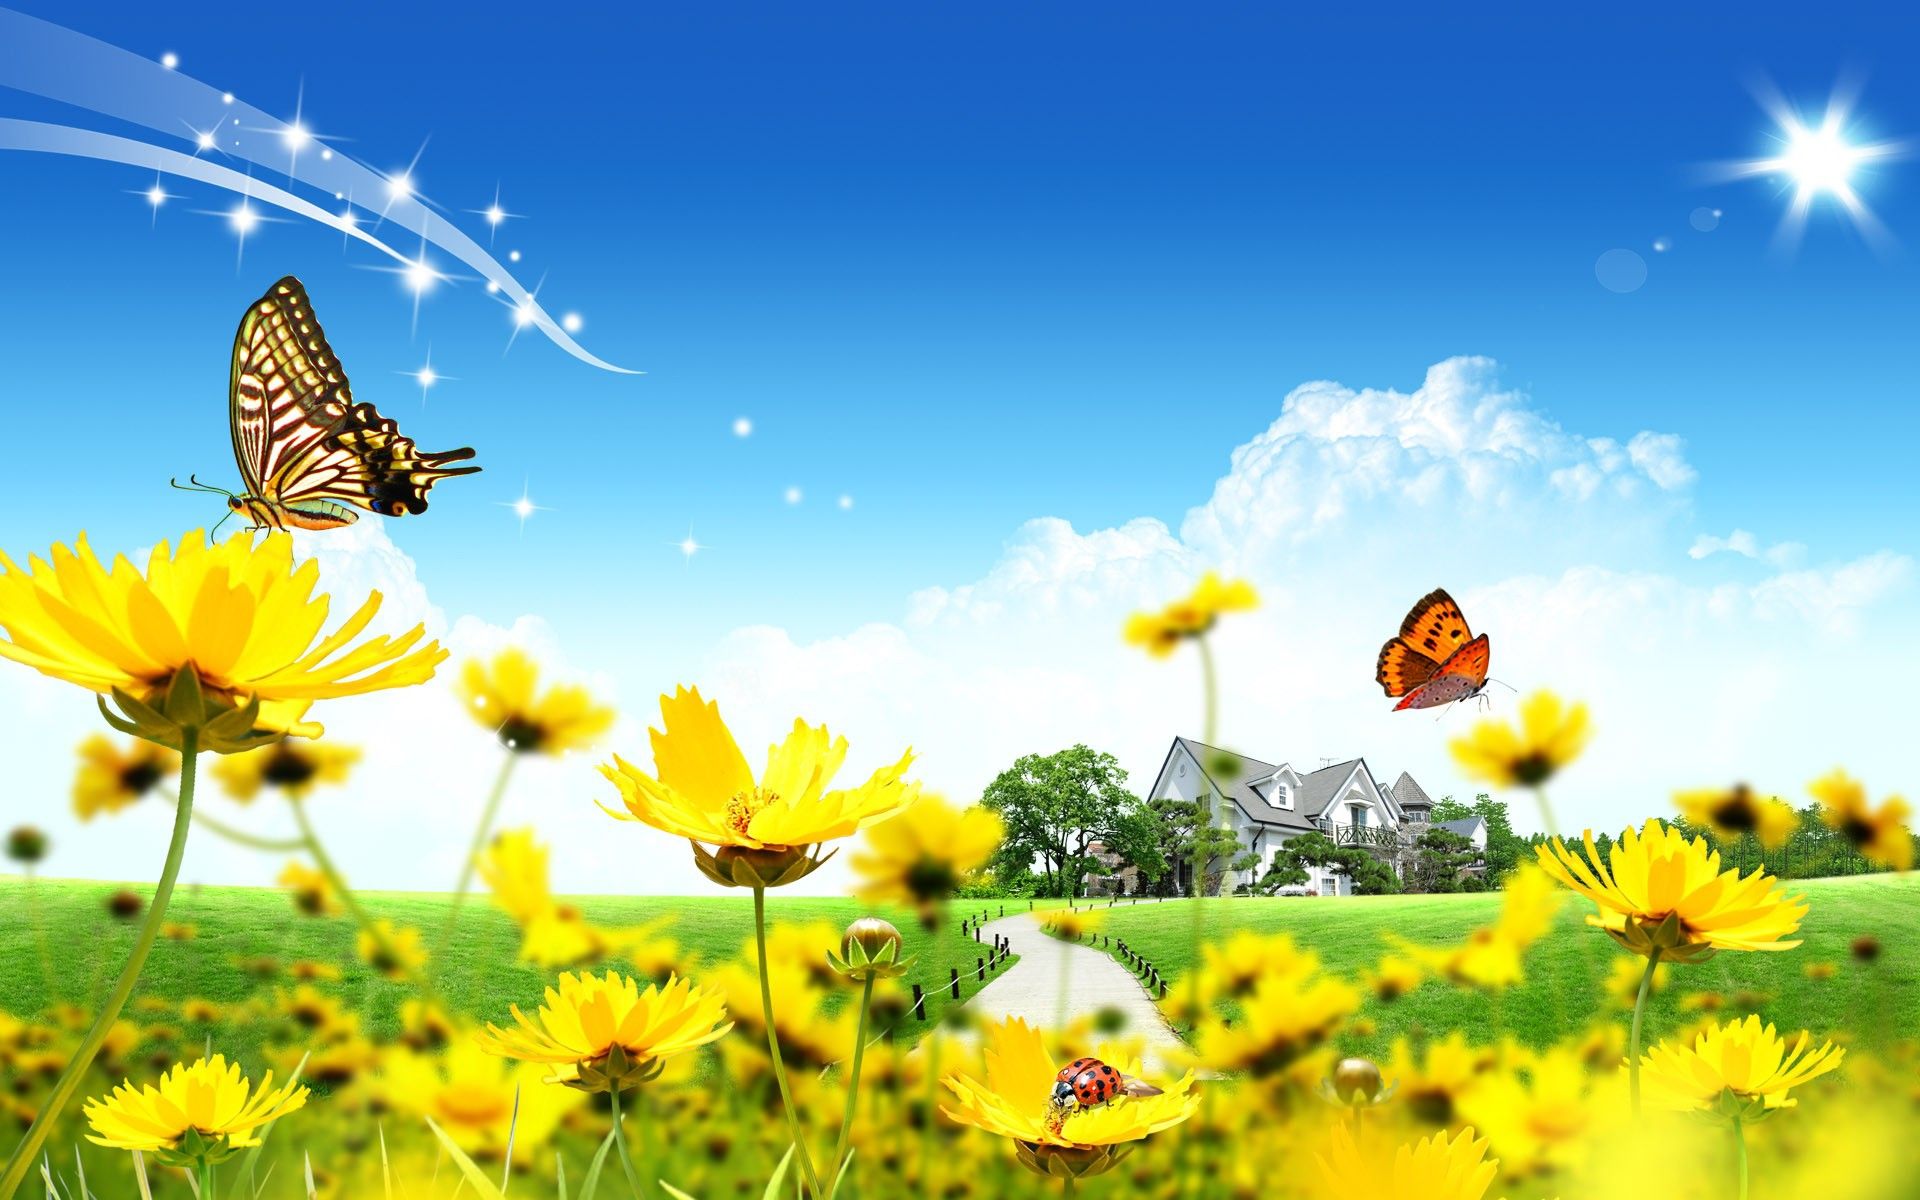 Download Wallpaper, Download nature flowers butterfly digital summer photomanipulation 1920x1200 wallpaper Wallpaper –Free Wallpaper Download